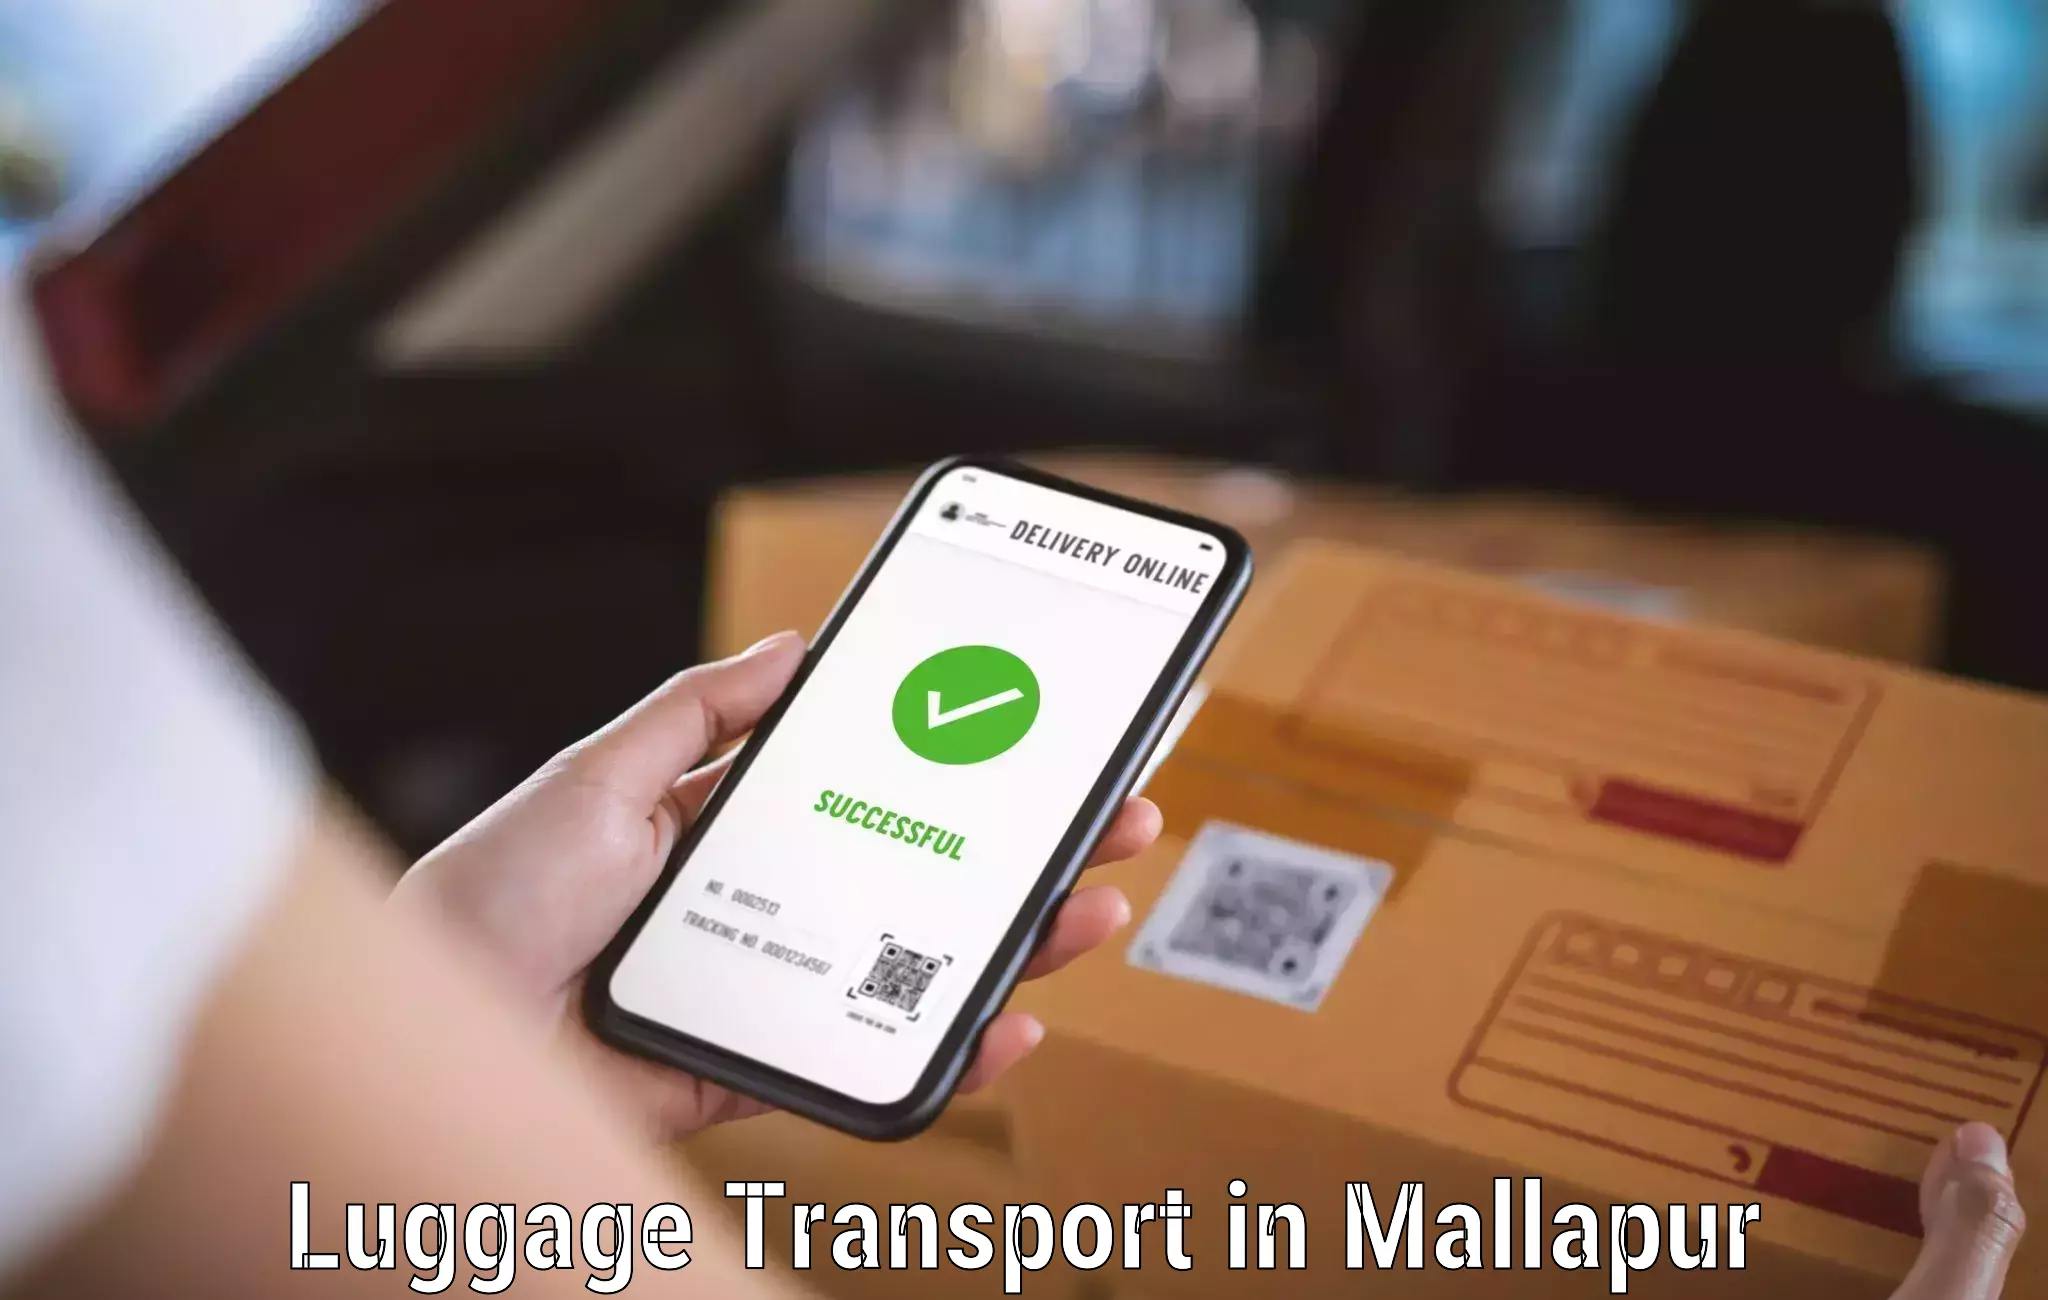 Quick baggage pickup in Mallapur